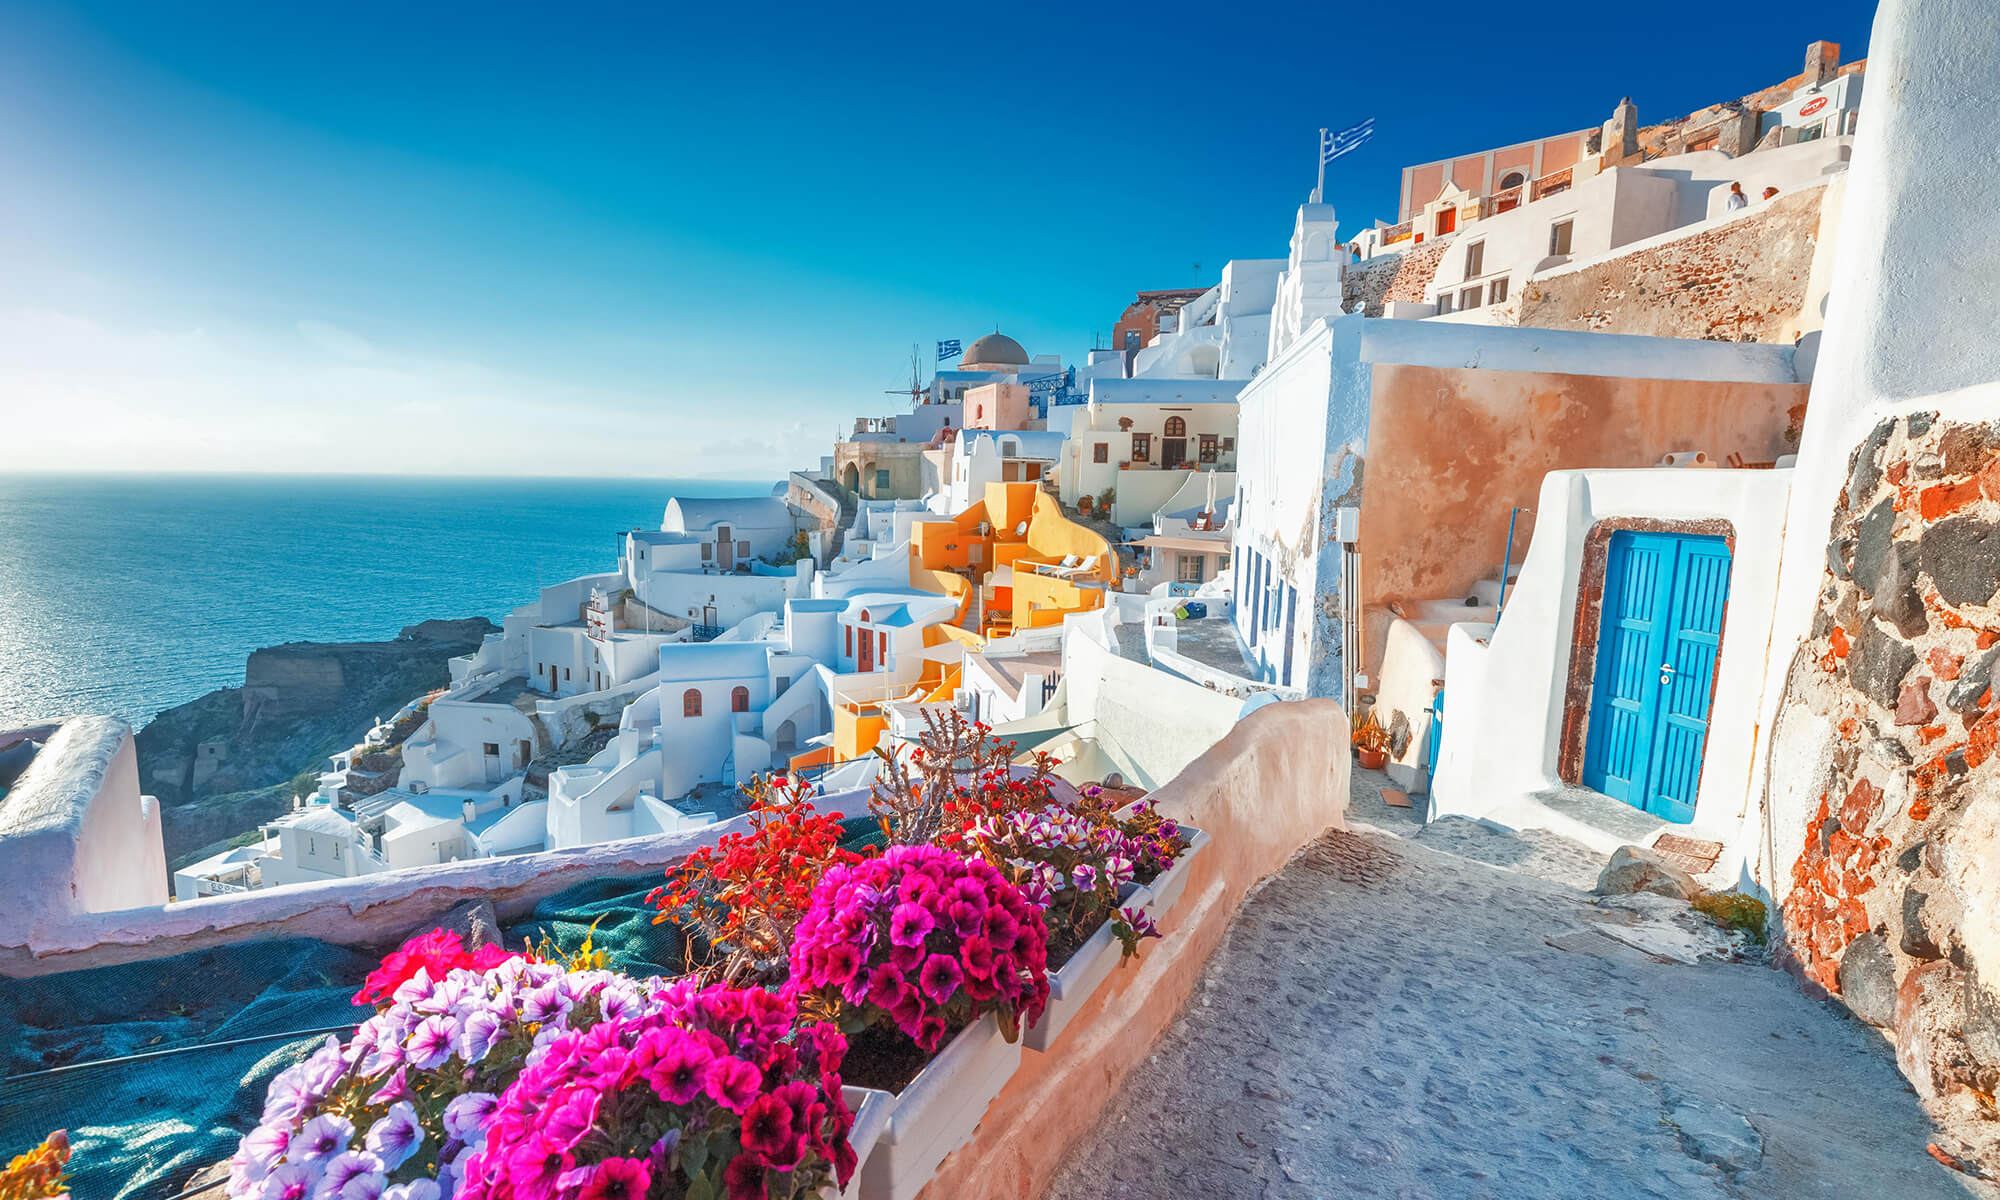 Santorini is Greeceu2019s most popular tourist destination